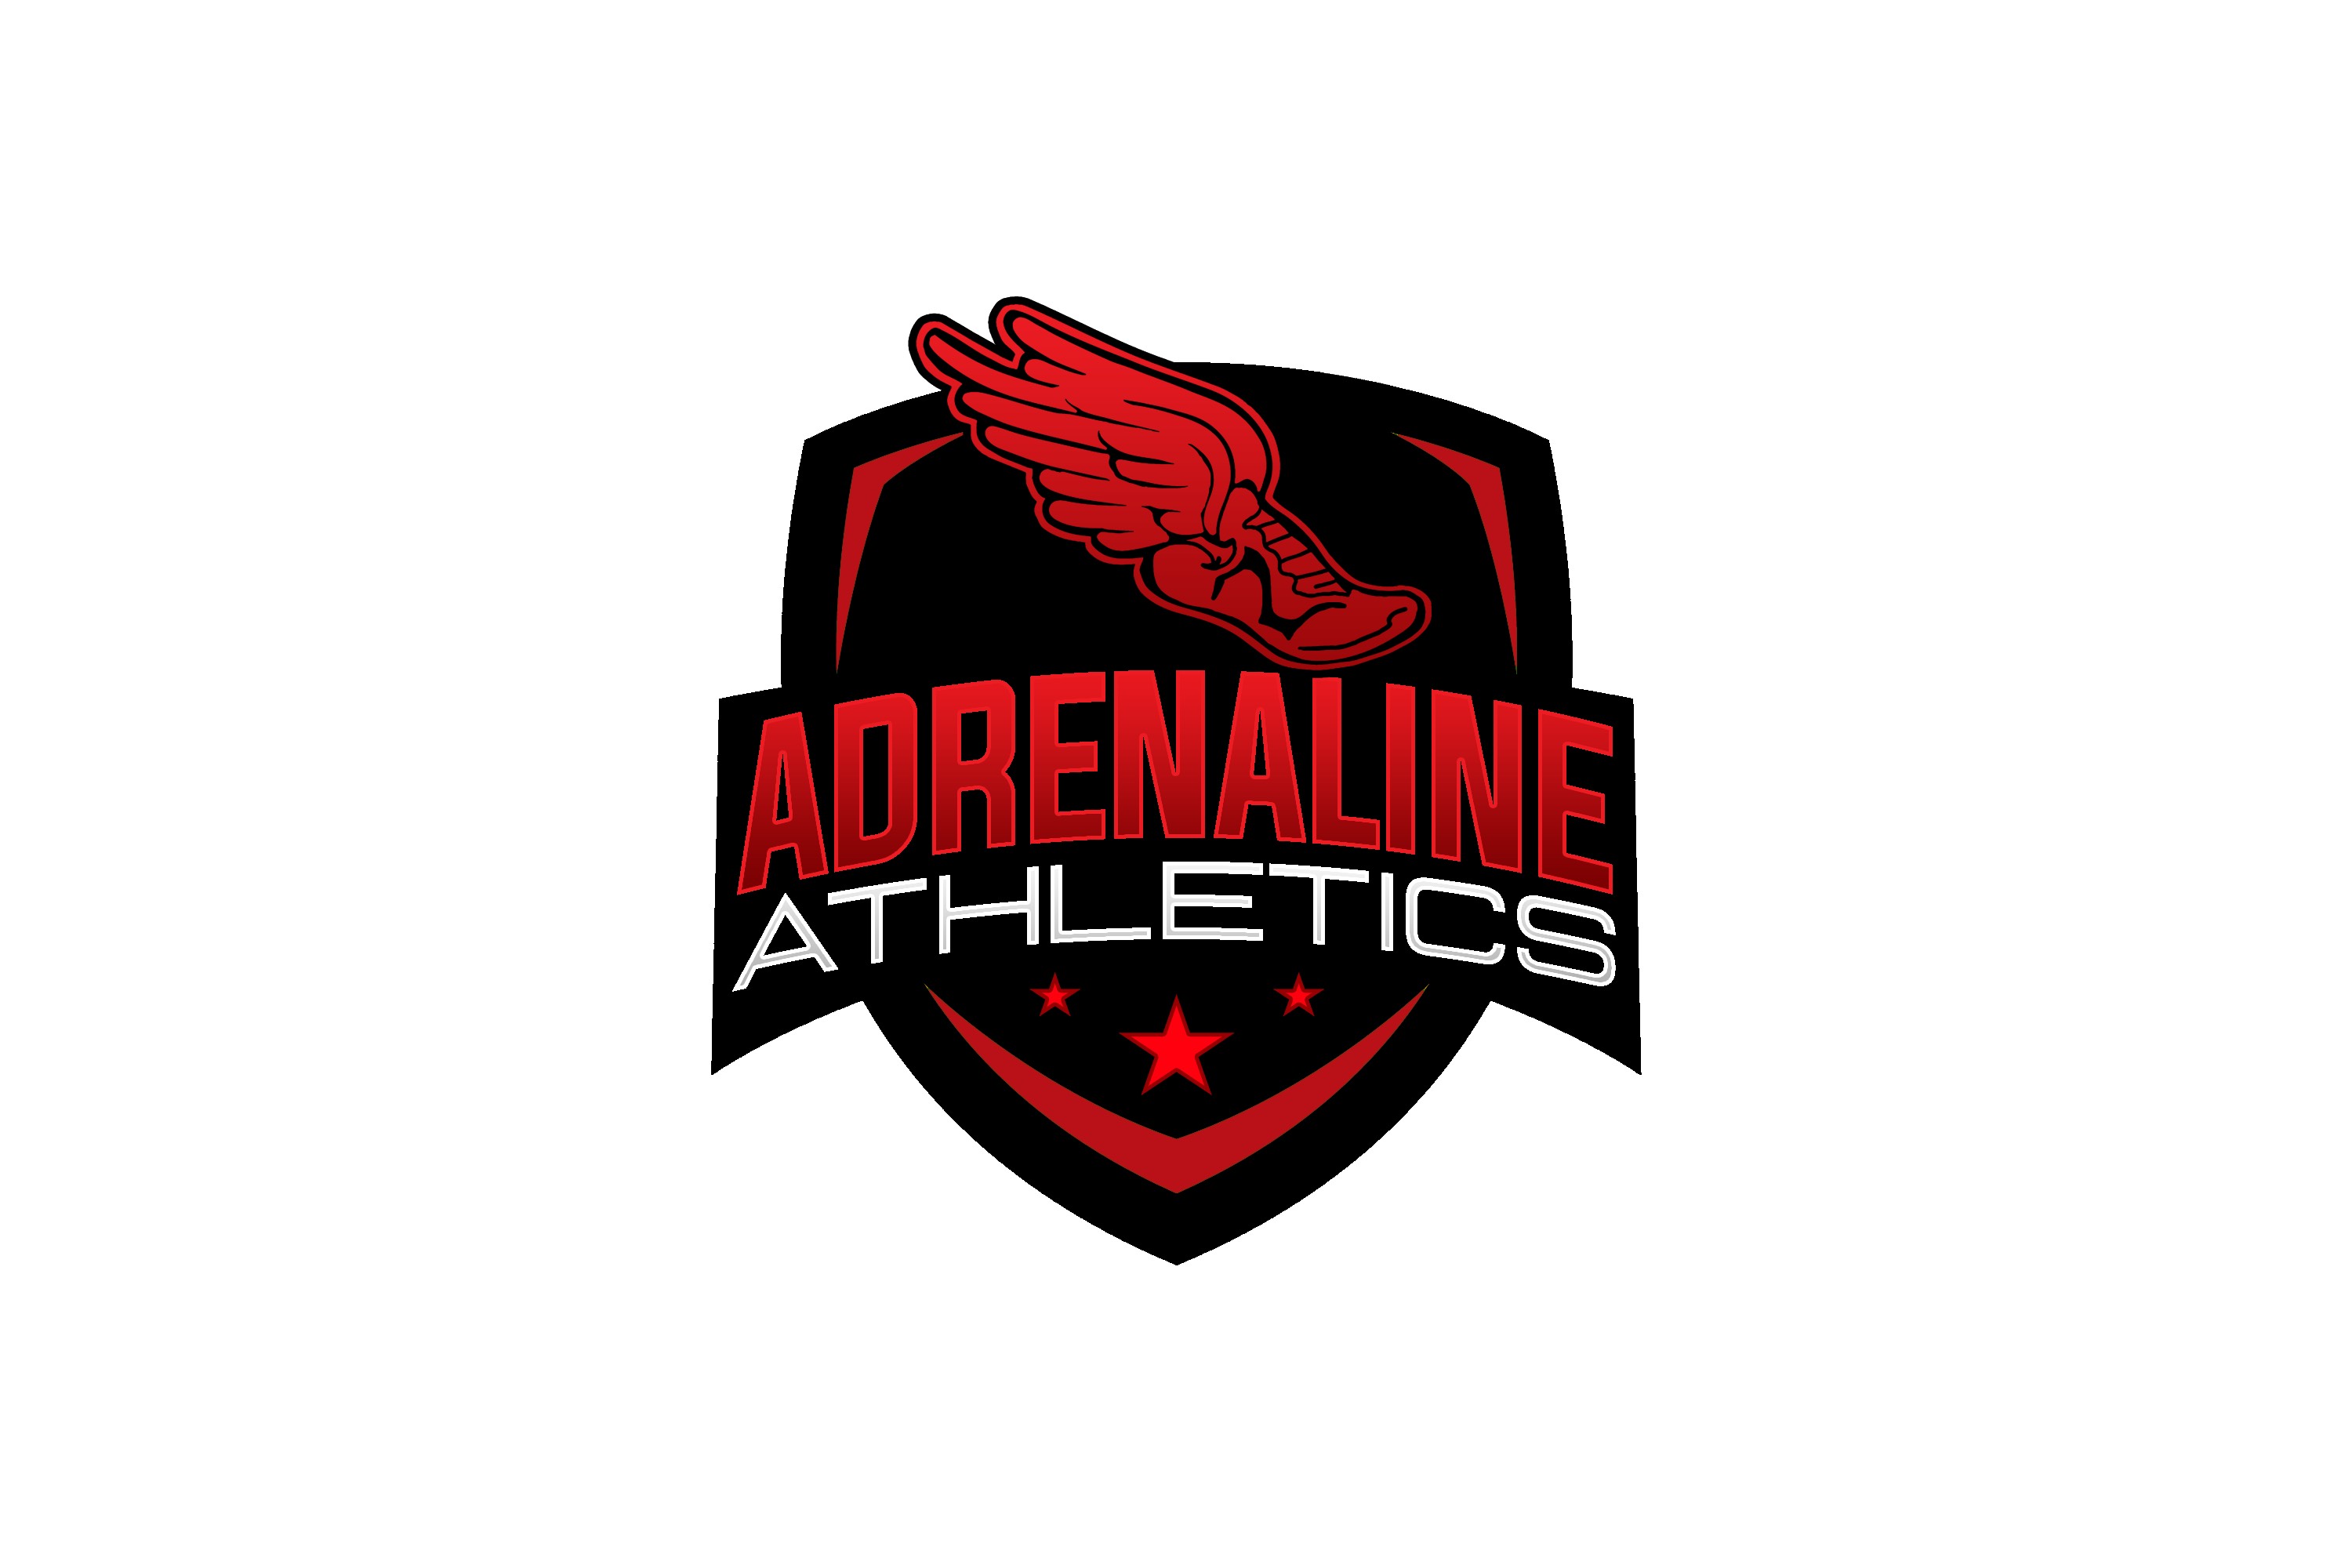 Adrenaline Athletics logo